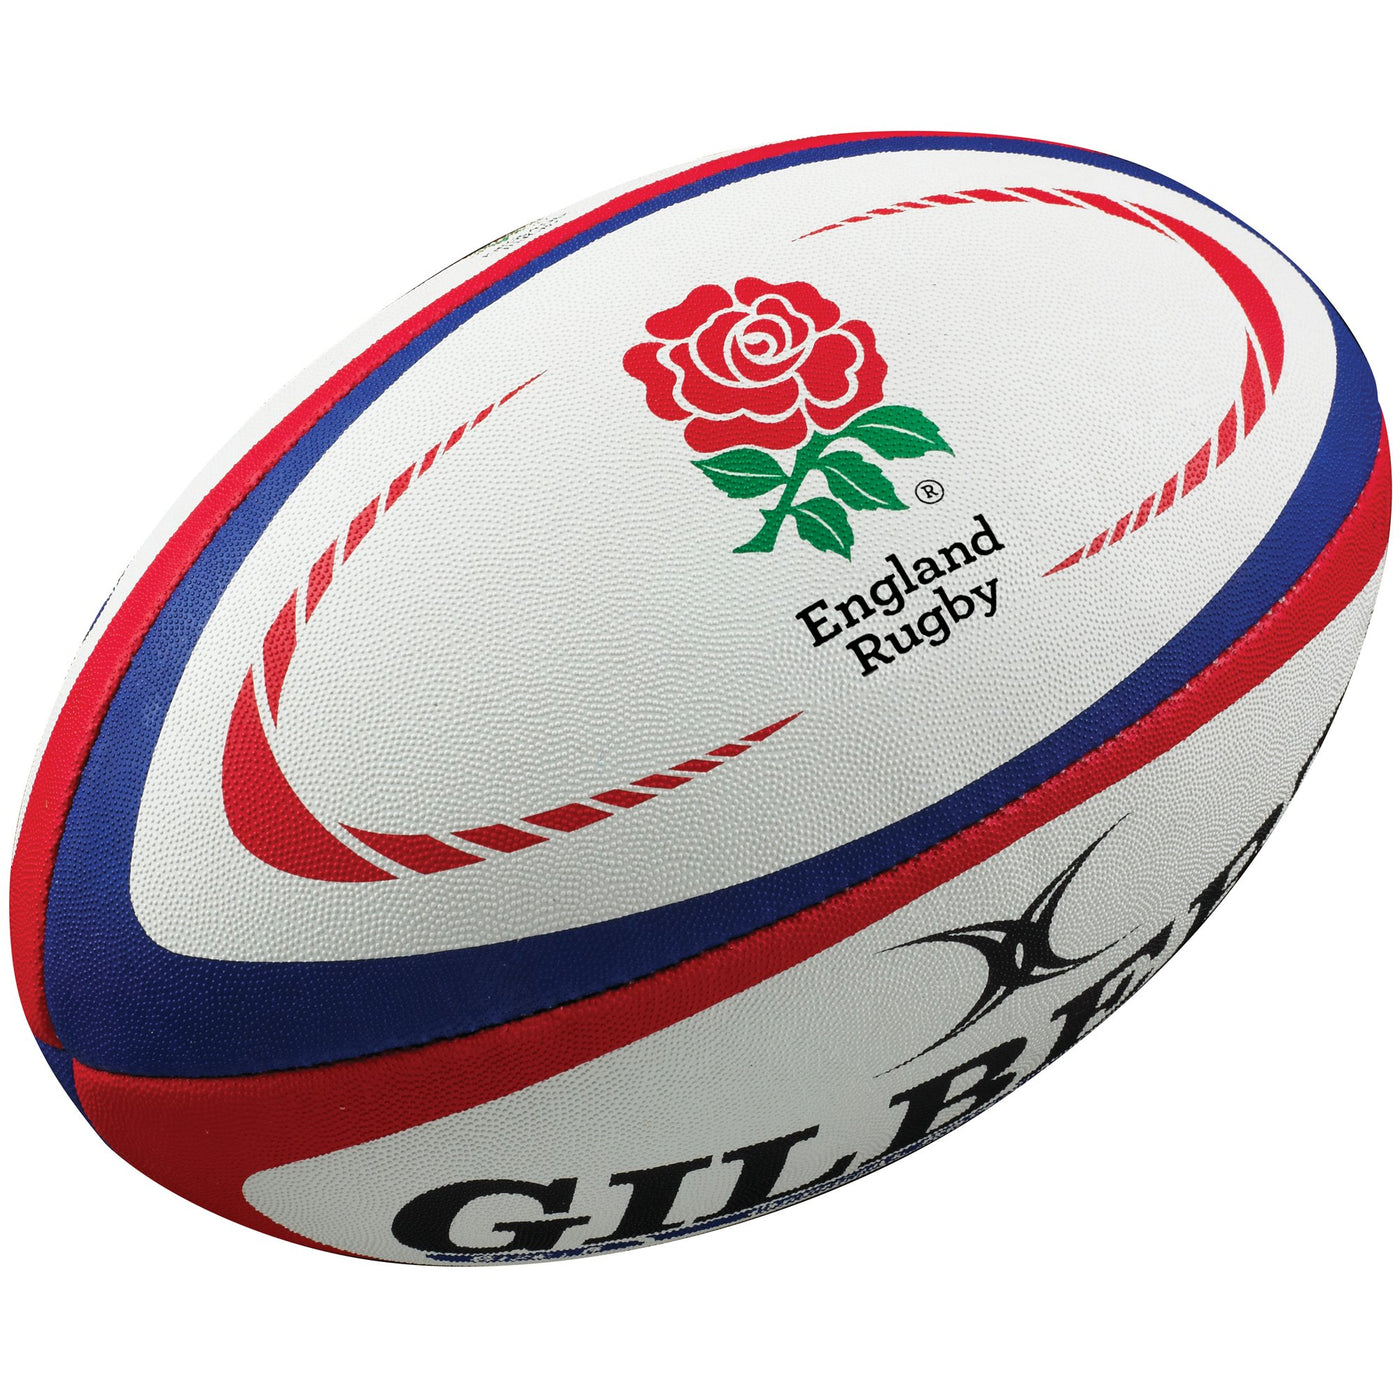 England Replica Midi Rugby Ball